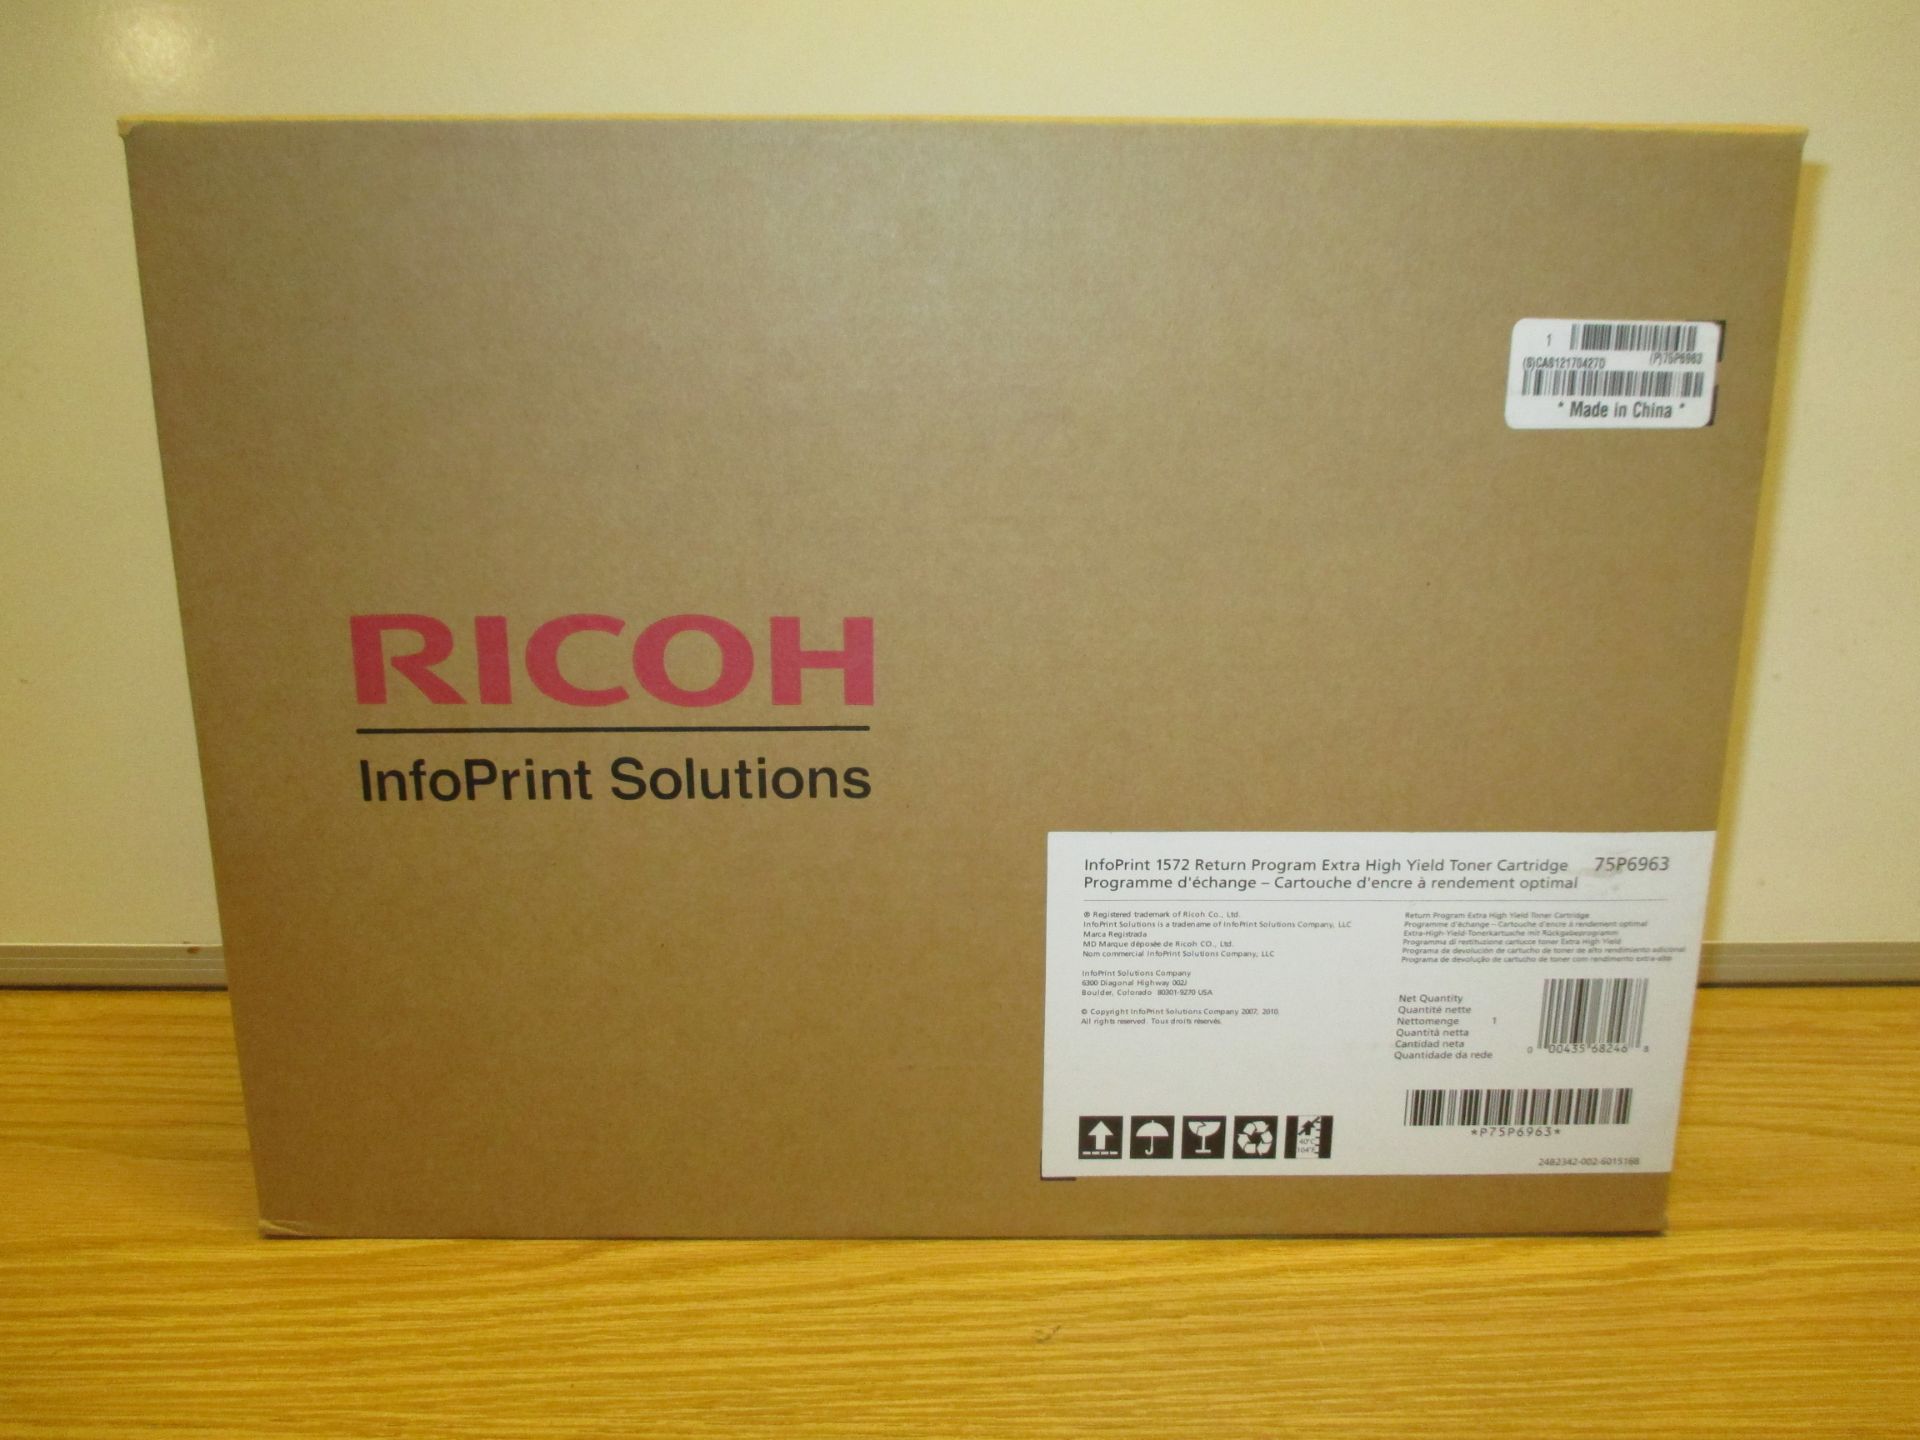 Genuine Ricoh Infoprint 75P6963 Extra High Yield Black Toner for 1572